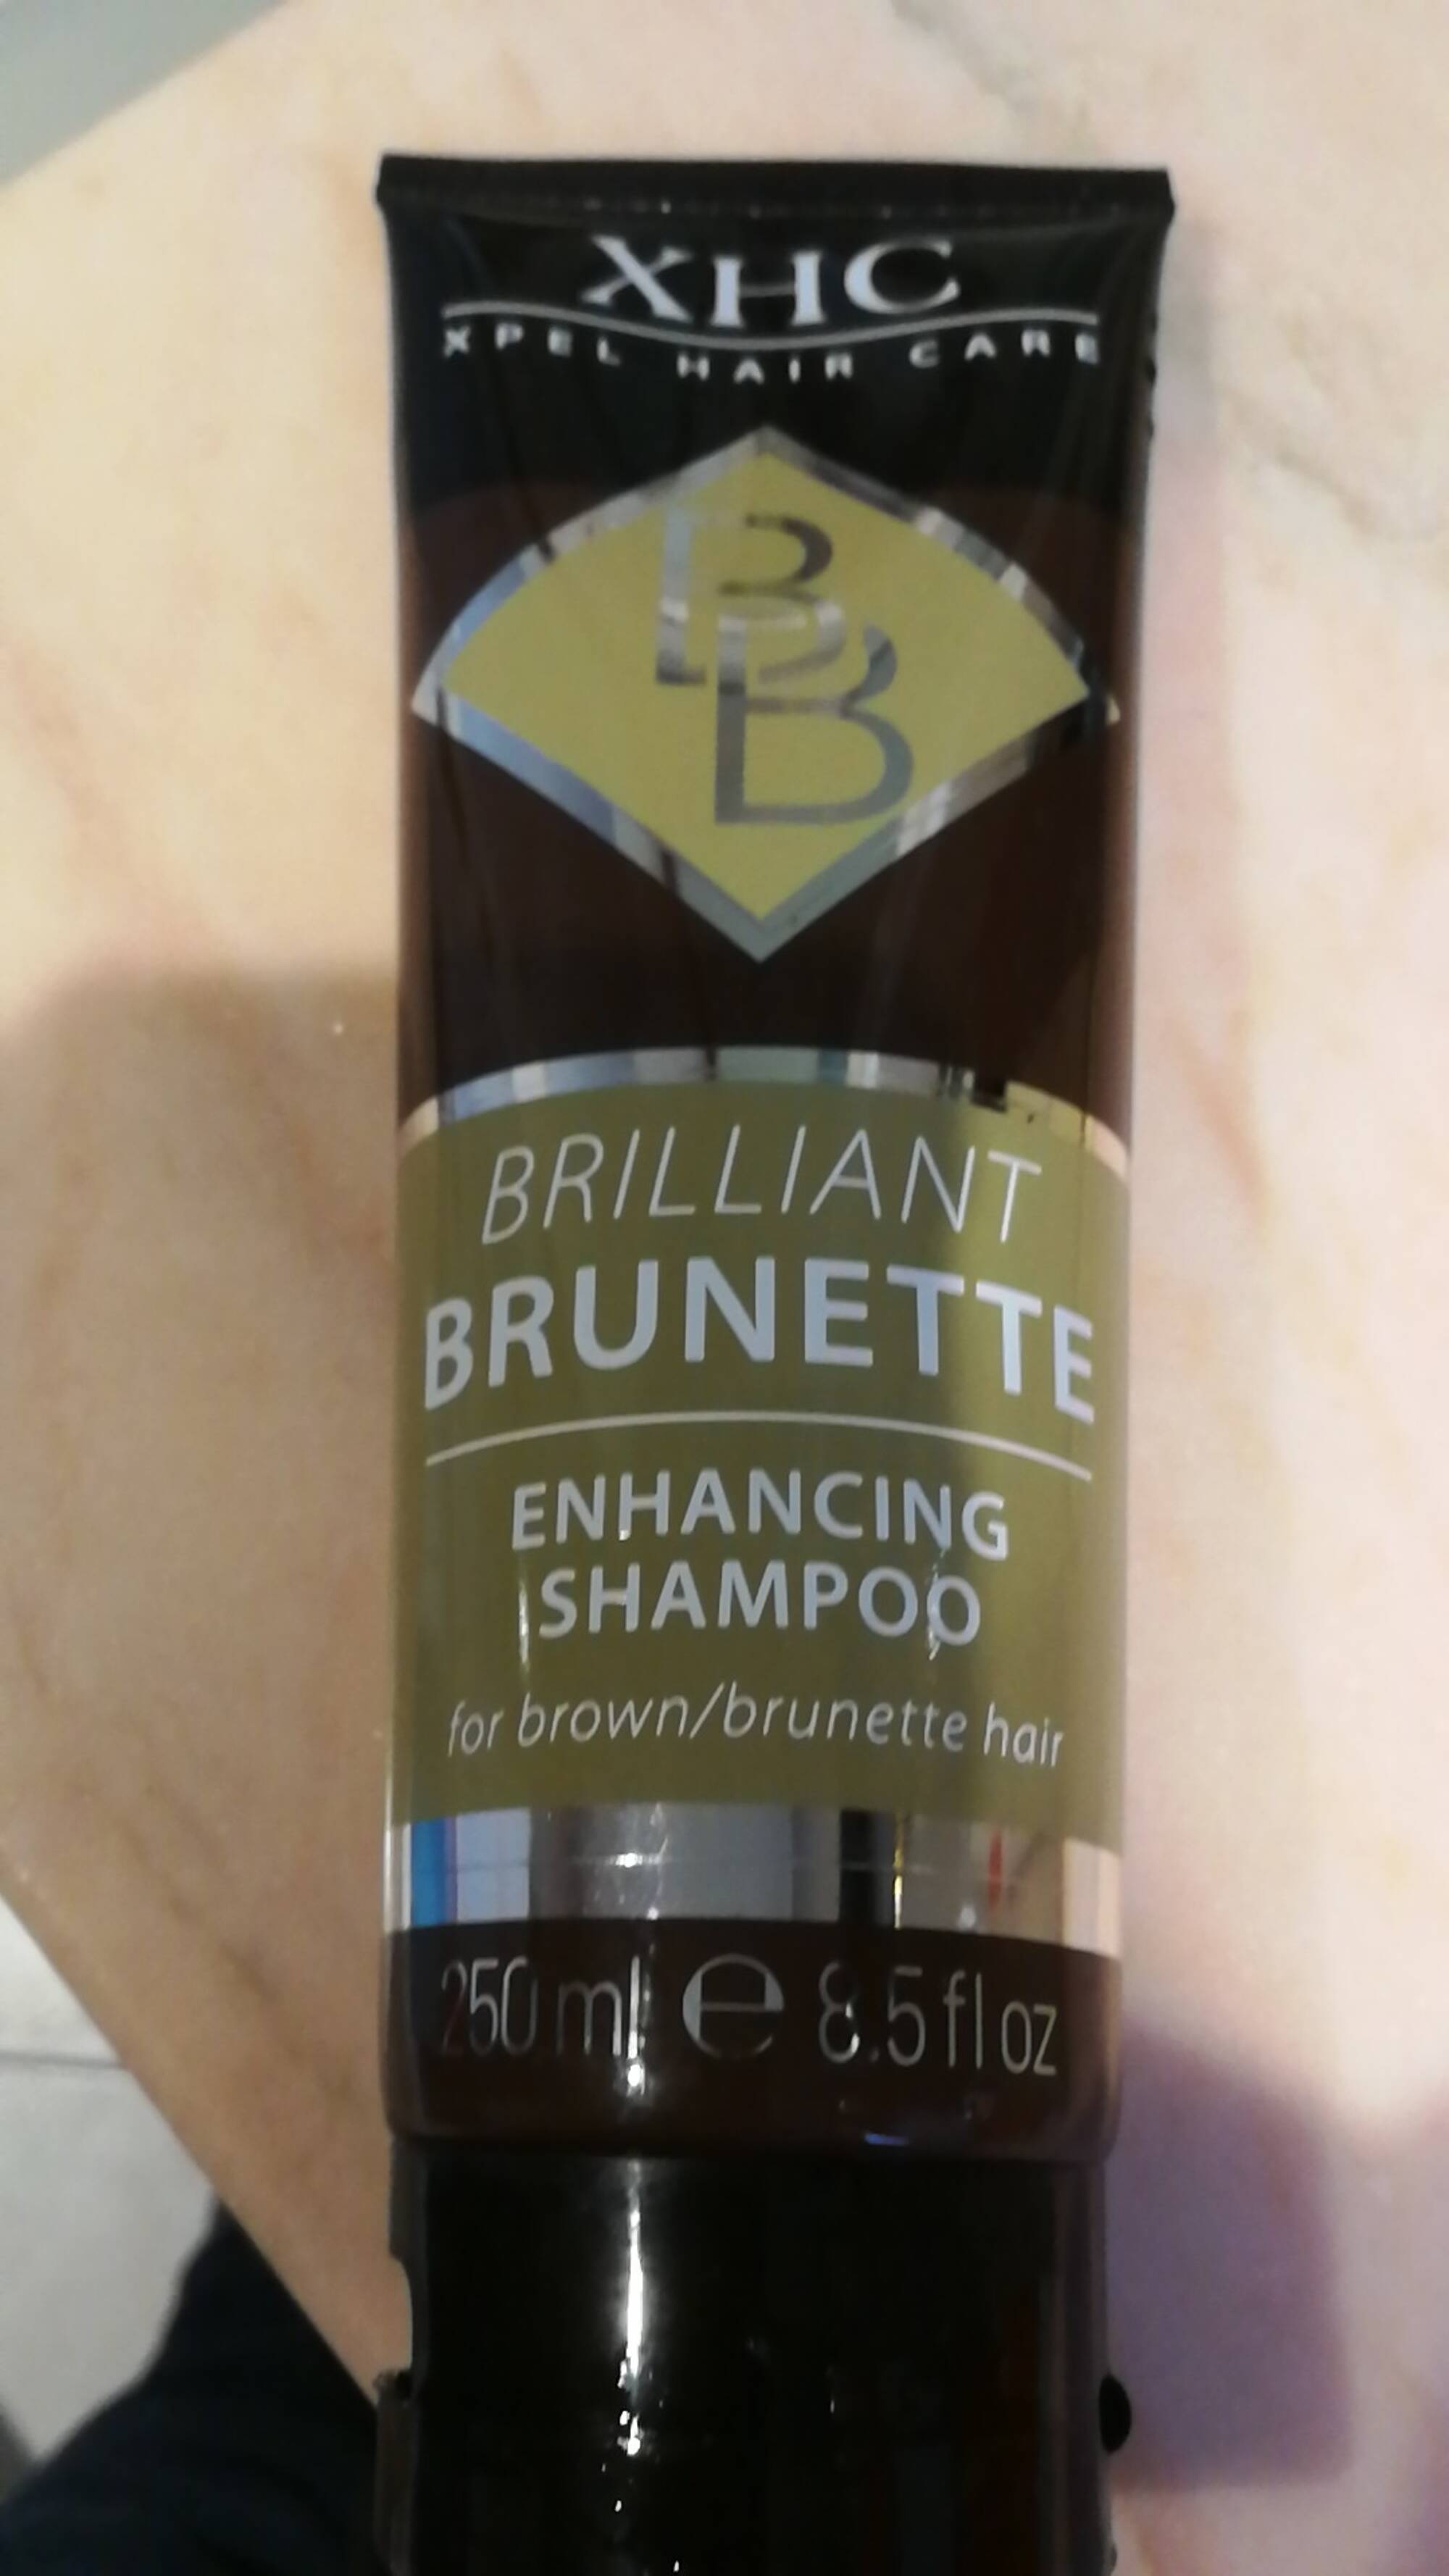 XHC - Brilliant Brunette - Enhancing shampoo